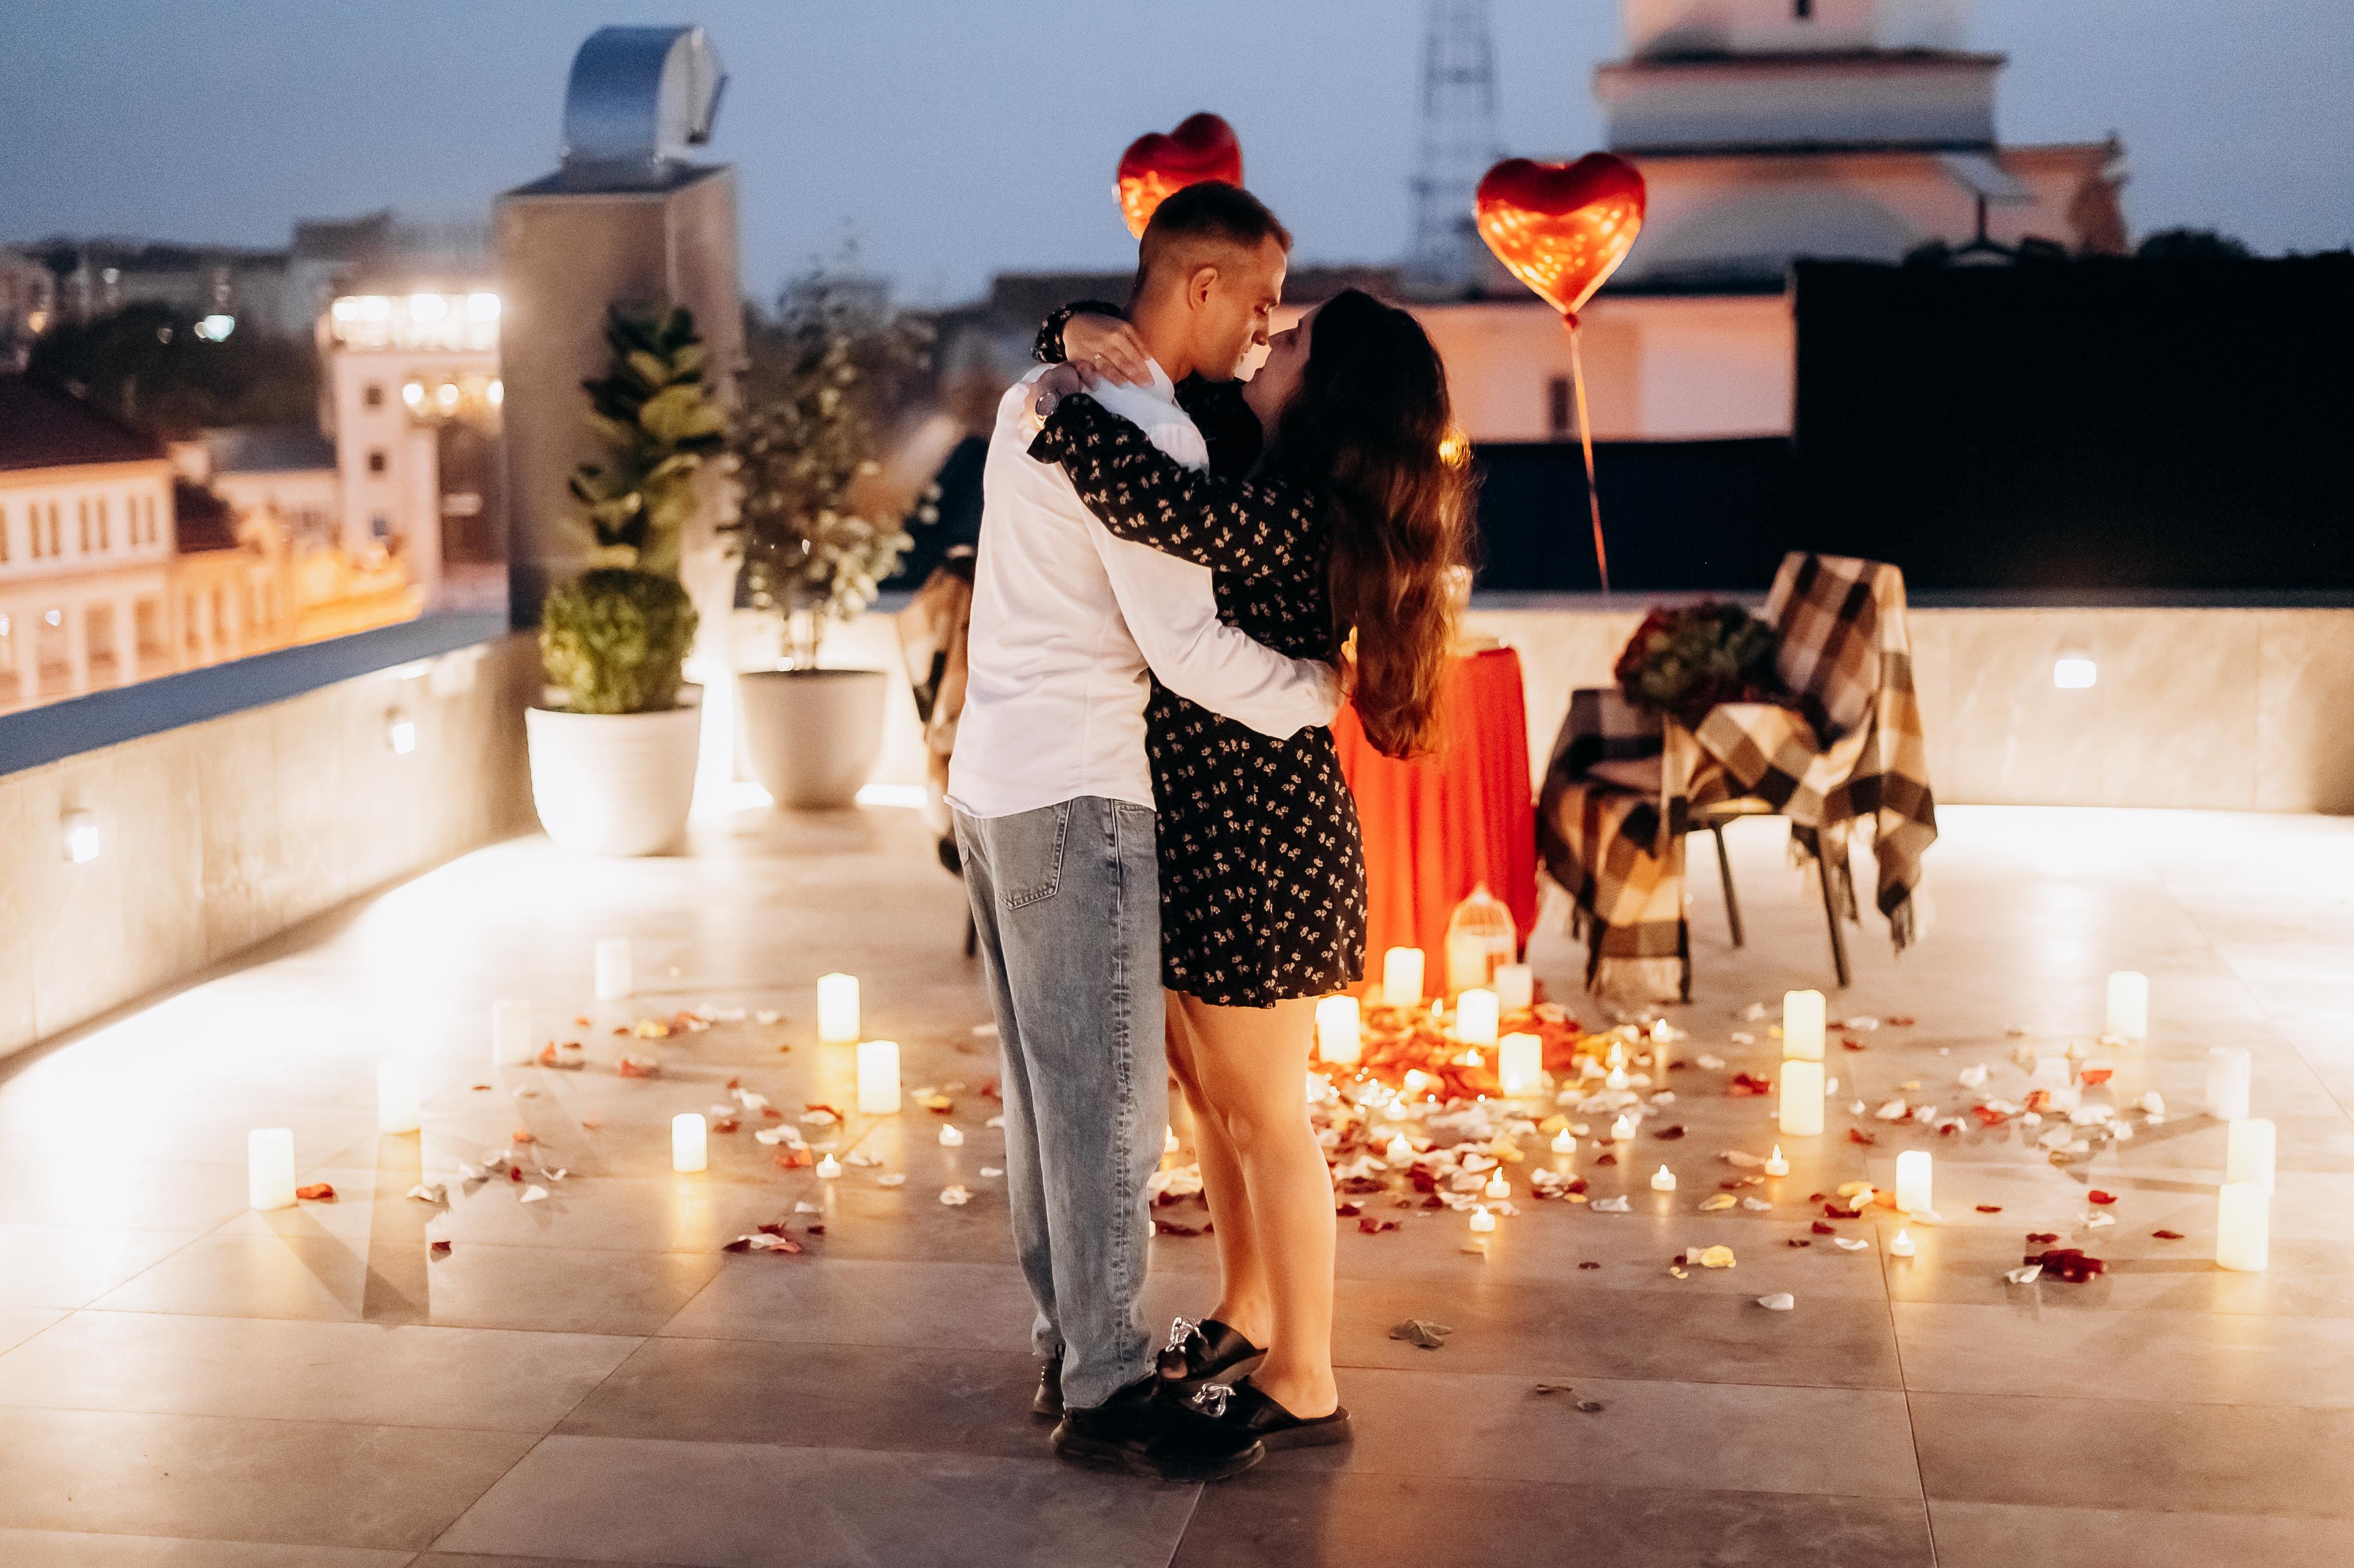 Романтическое свидание на крыше с видом на Ратушу